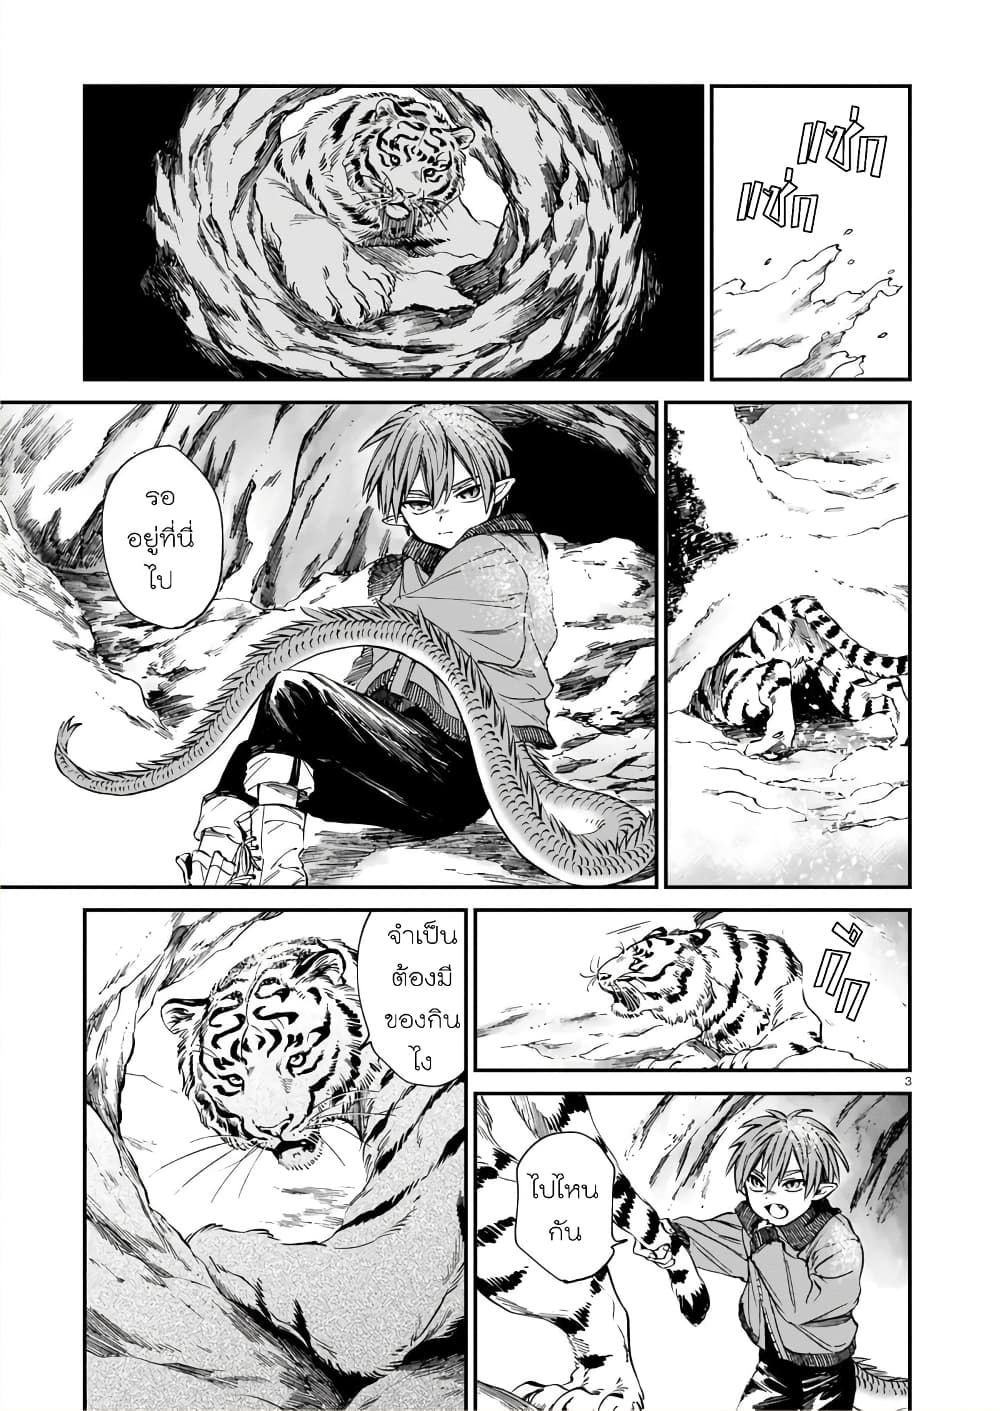 Tora ha Ryuu wo mada Tabenai โตเมื่อไร จับหม่ำ 10-เสือขาวในหิมะ